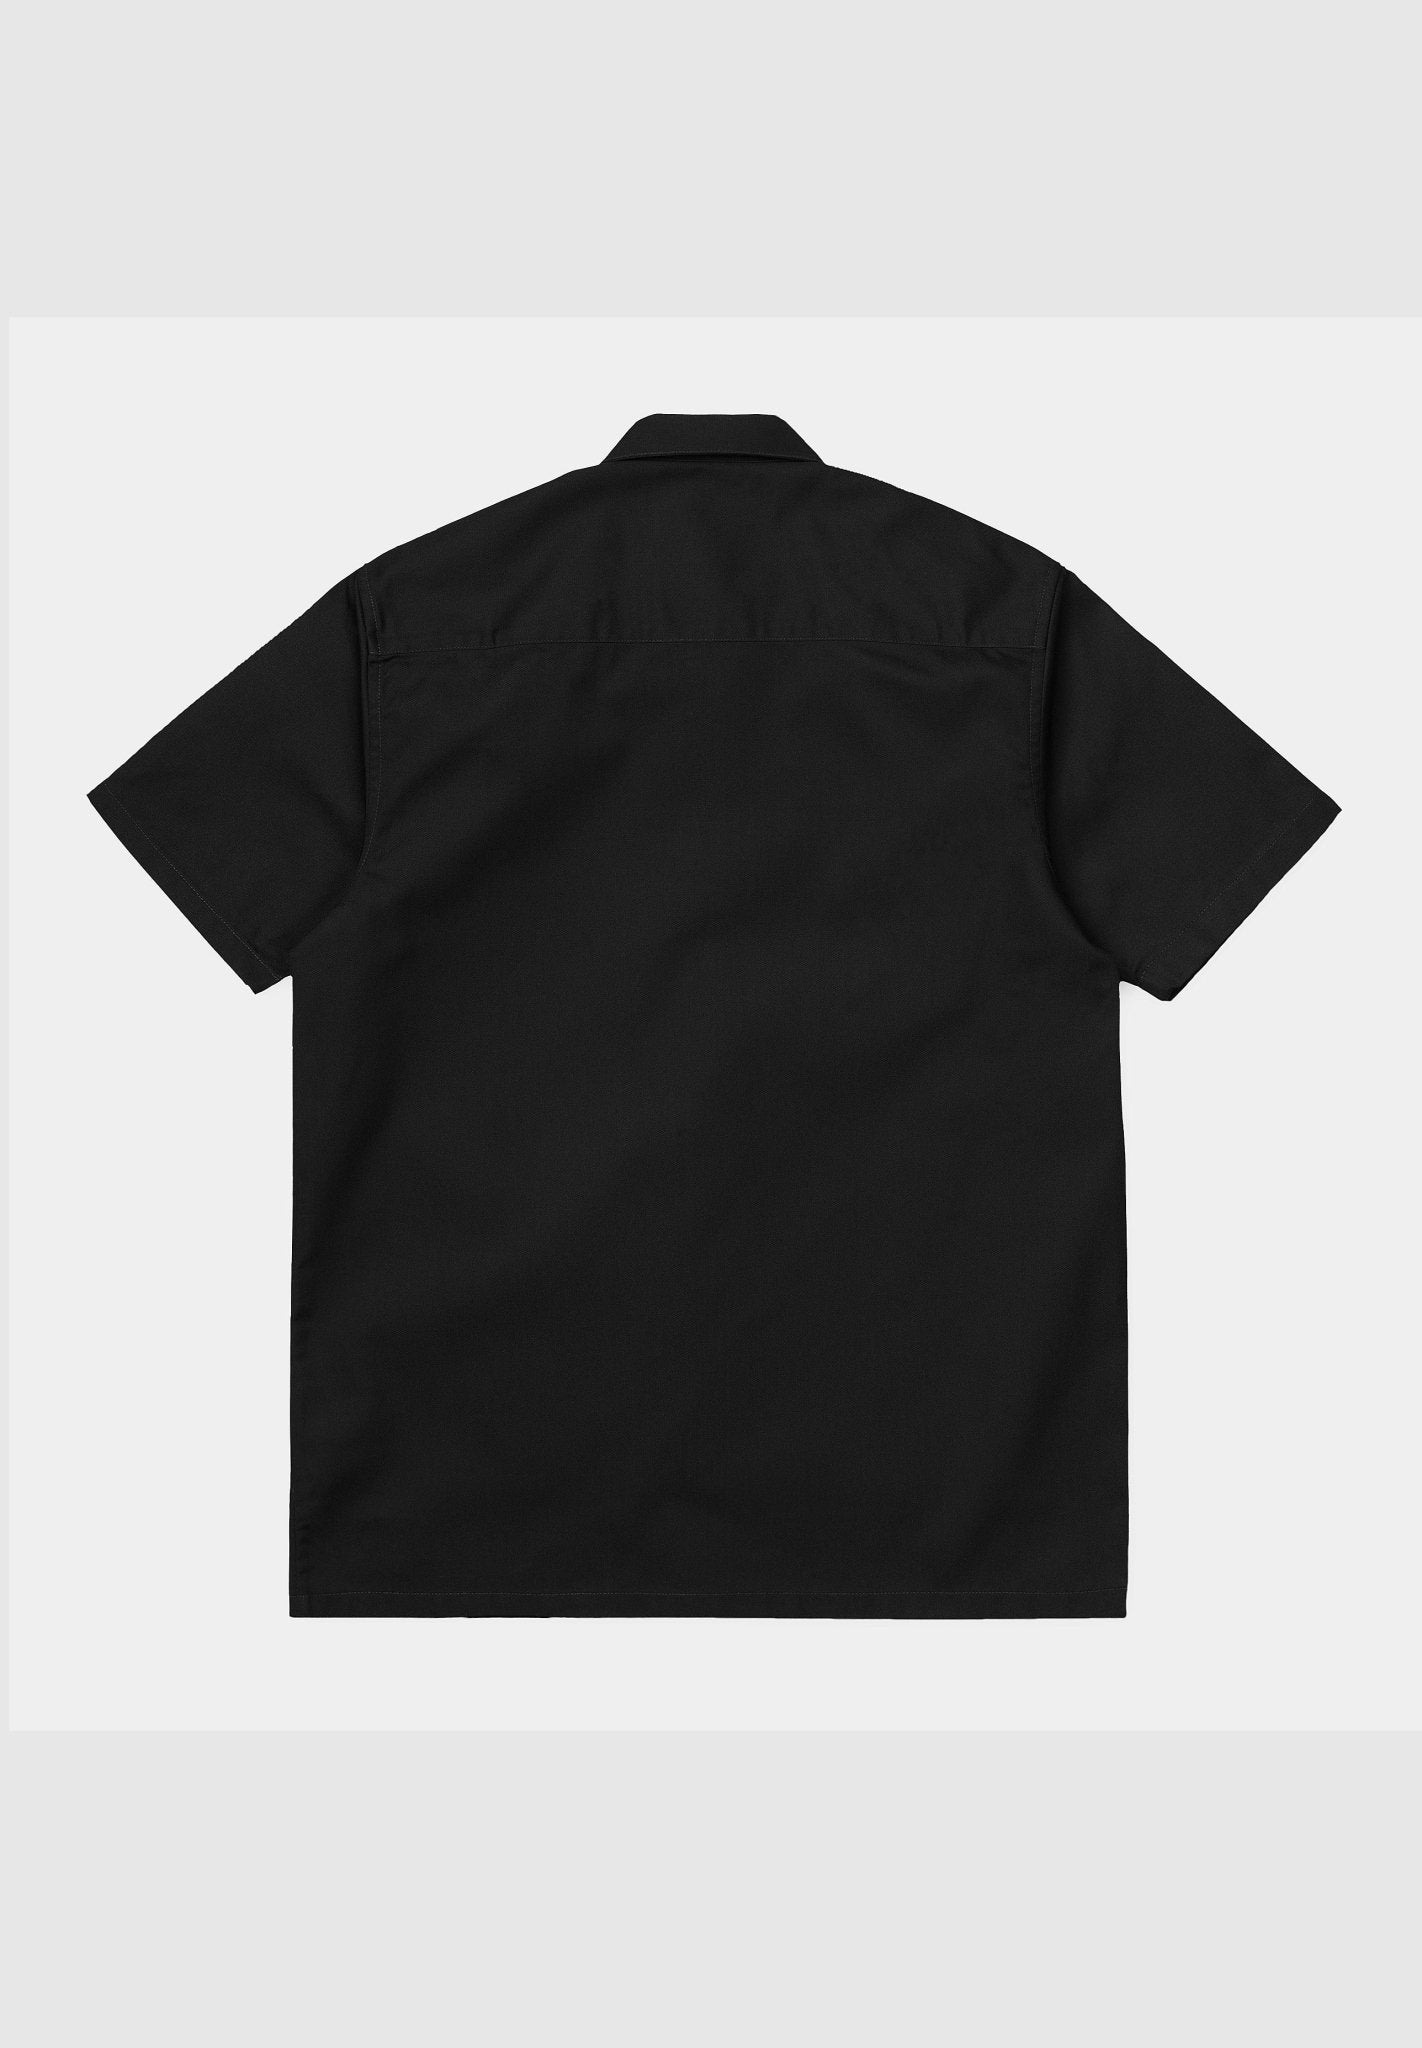 CARHARTT WIP-S/S Master Shirt - BACKYARD